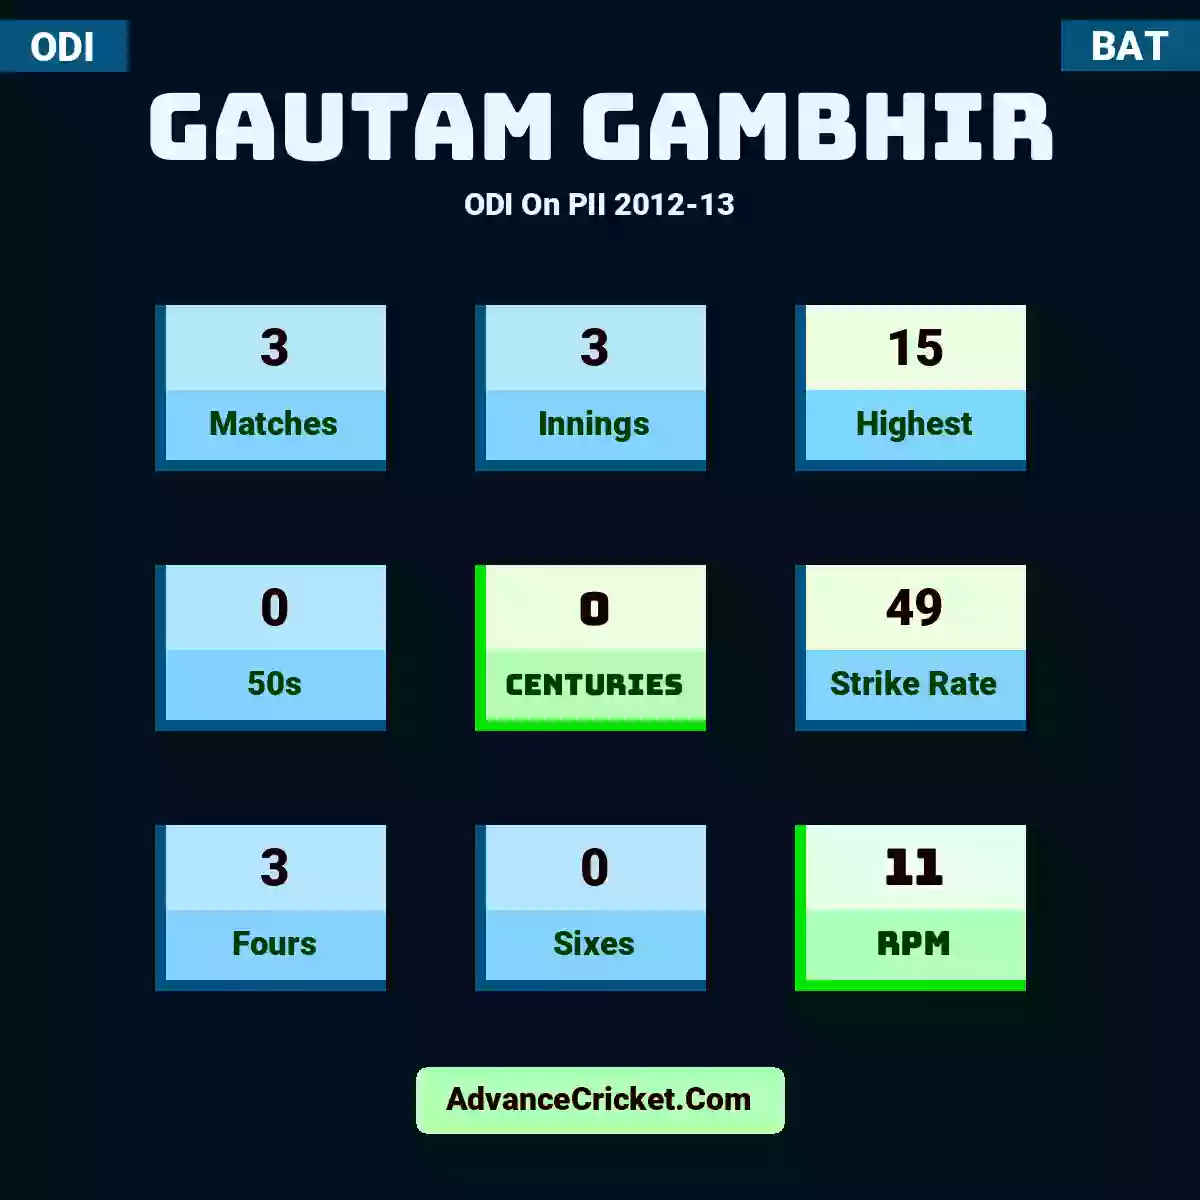 Gautam Gambhir ODI  On PII 2012-13, Gautam Gambhir played 3 matches, scored 15 runs as highest, 0 half-centuries, and 0 centuries, with a strike rate of 49. G.Gambhir hit 3 fours and 0 sixes, with an RPM of 11.